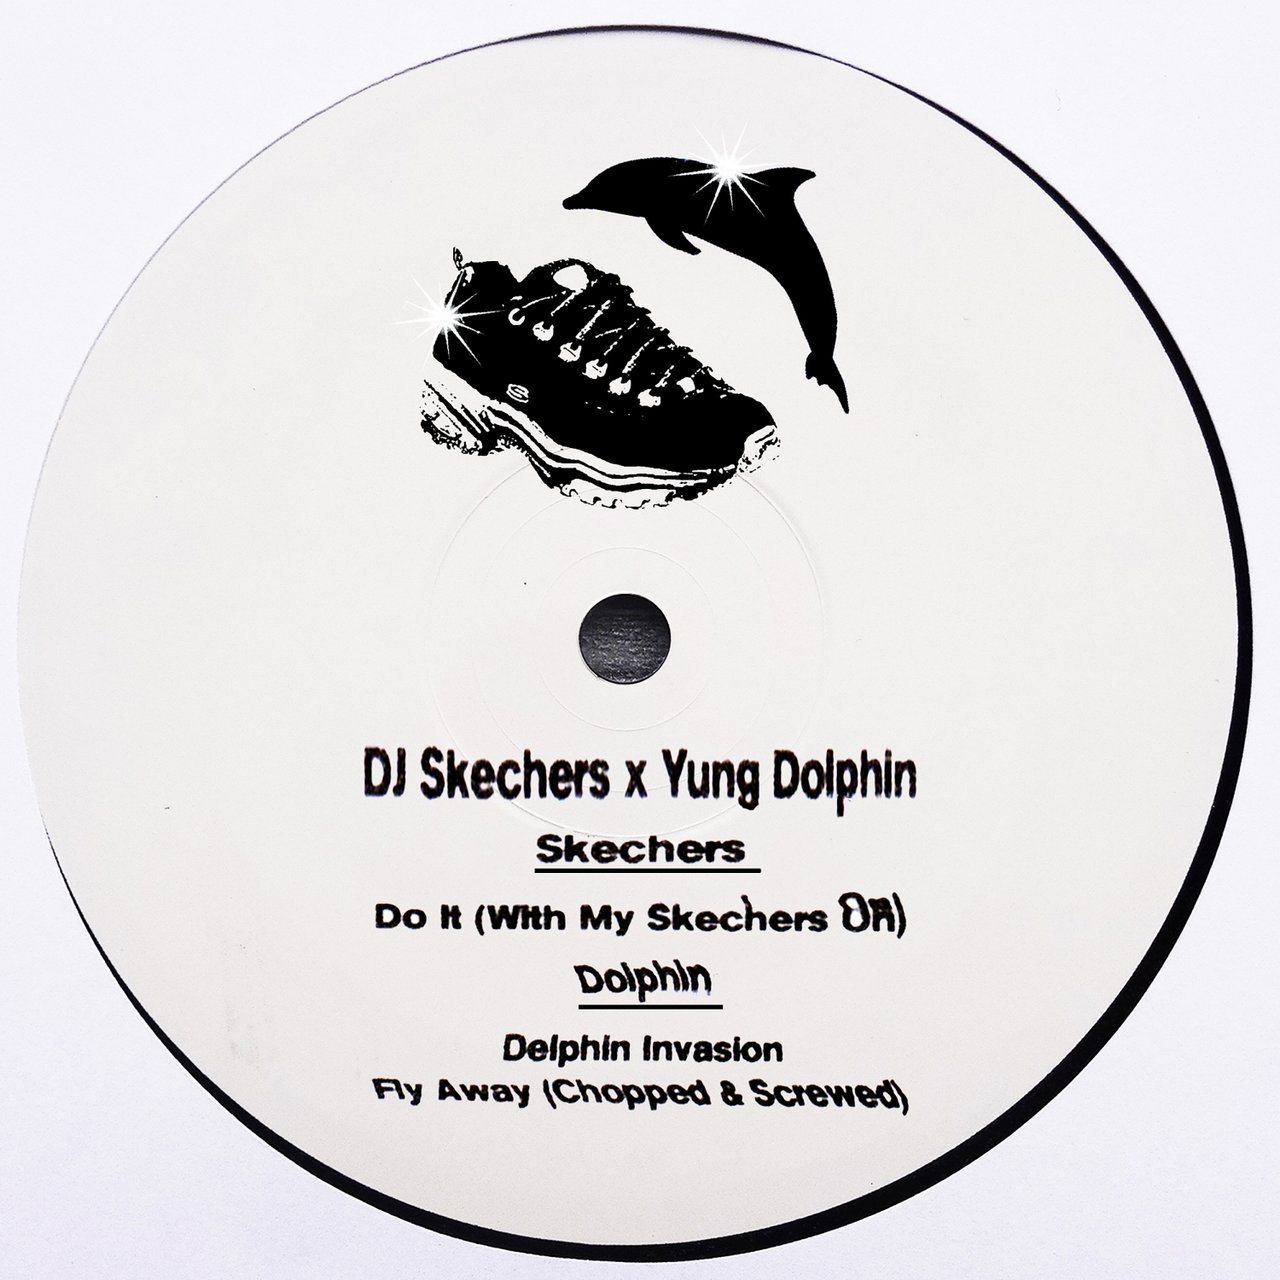 image cover: DJ Skechers & Yung Dolphin - Delphin Invasion / LTDOLPHSKECH-700X